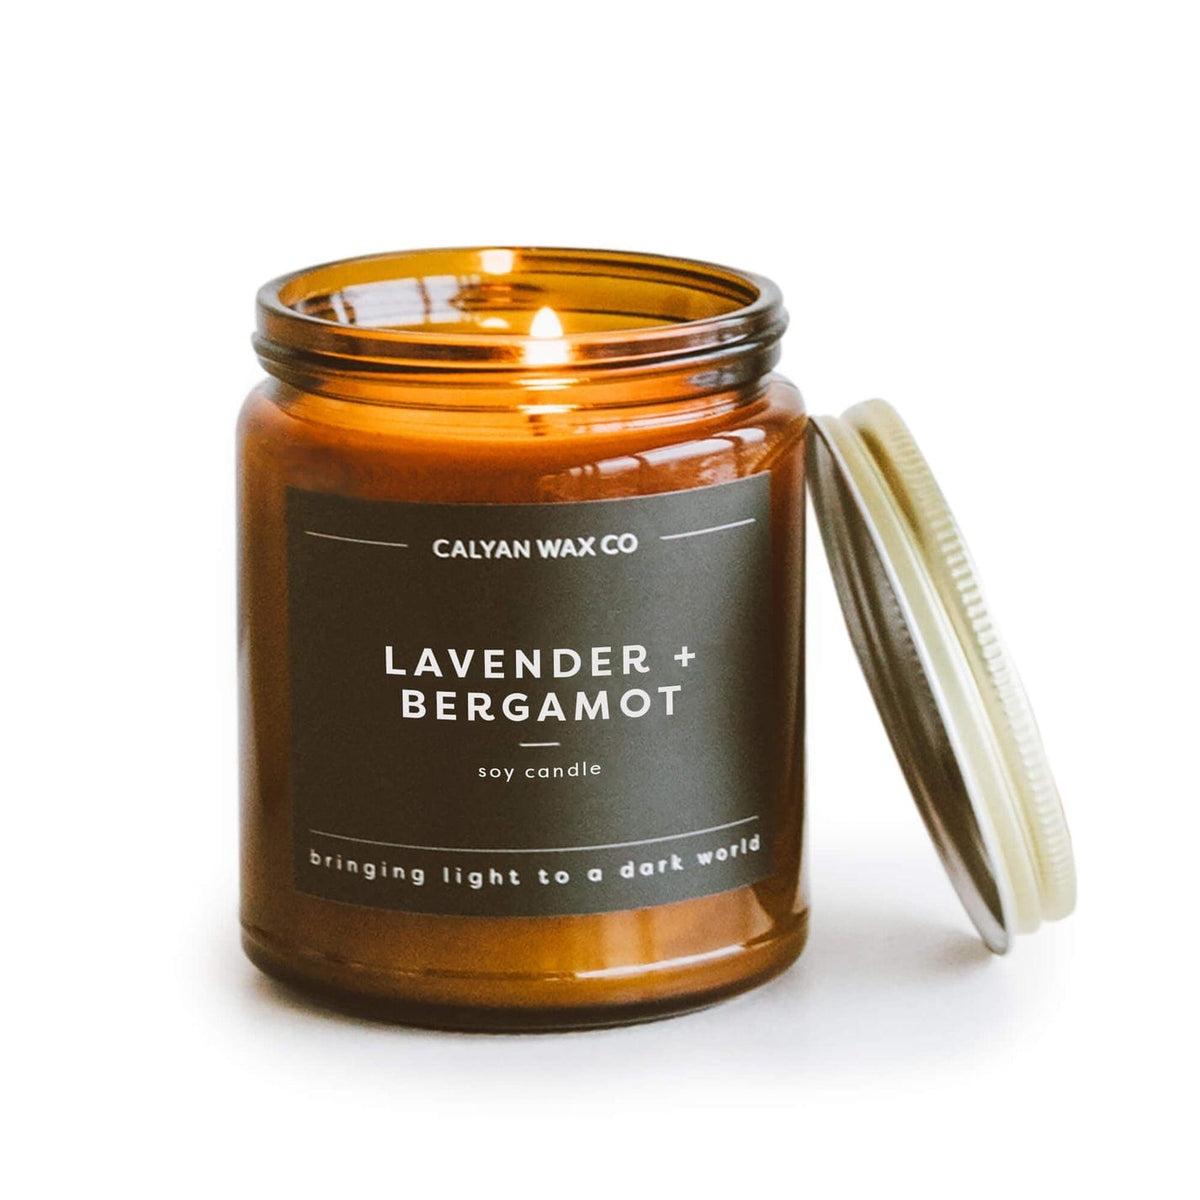 Calyan Wax Co. Lavender + Bergamot Soy Candle